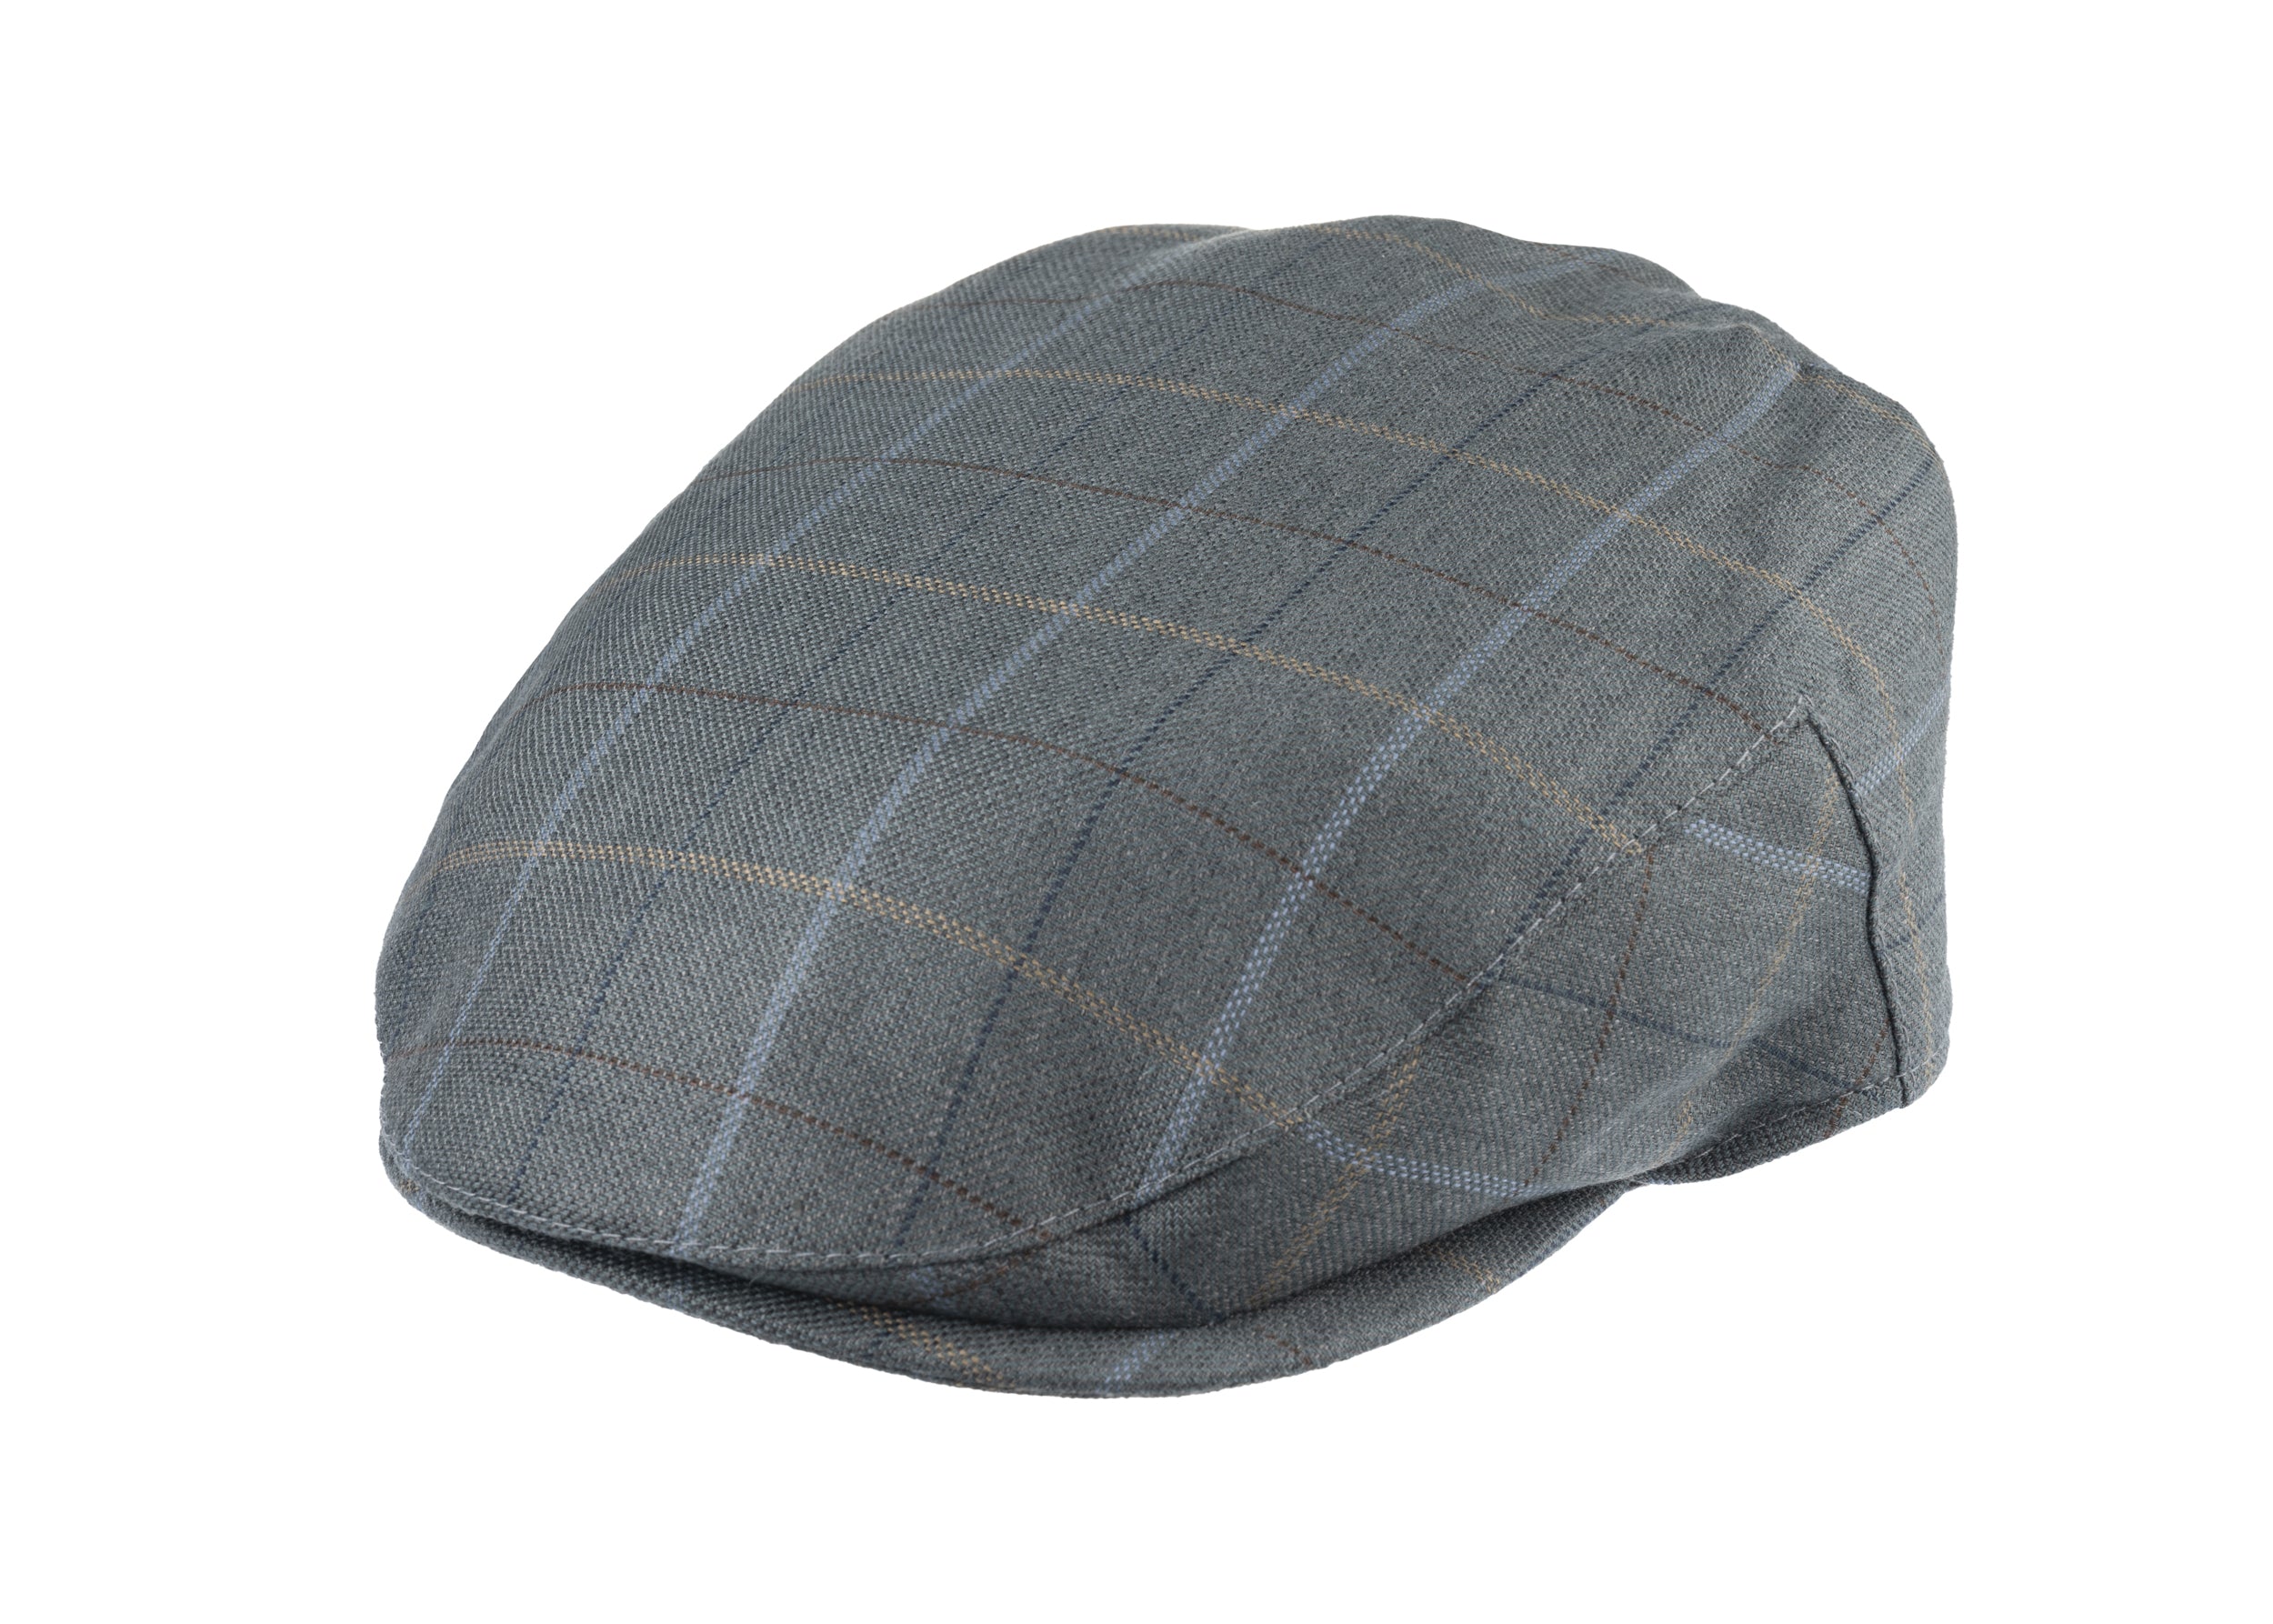 Balmoral flat cap in wool/linen fabric